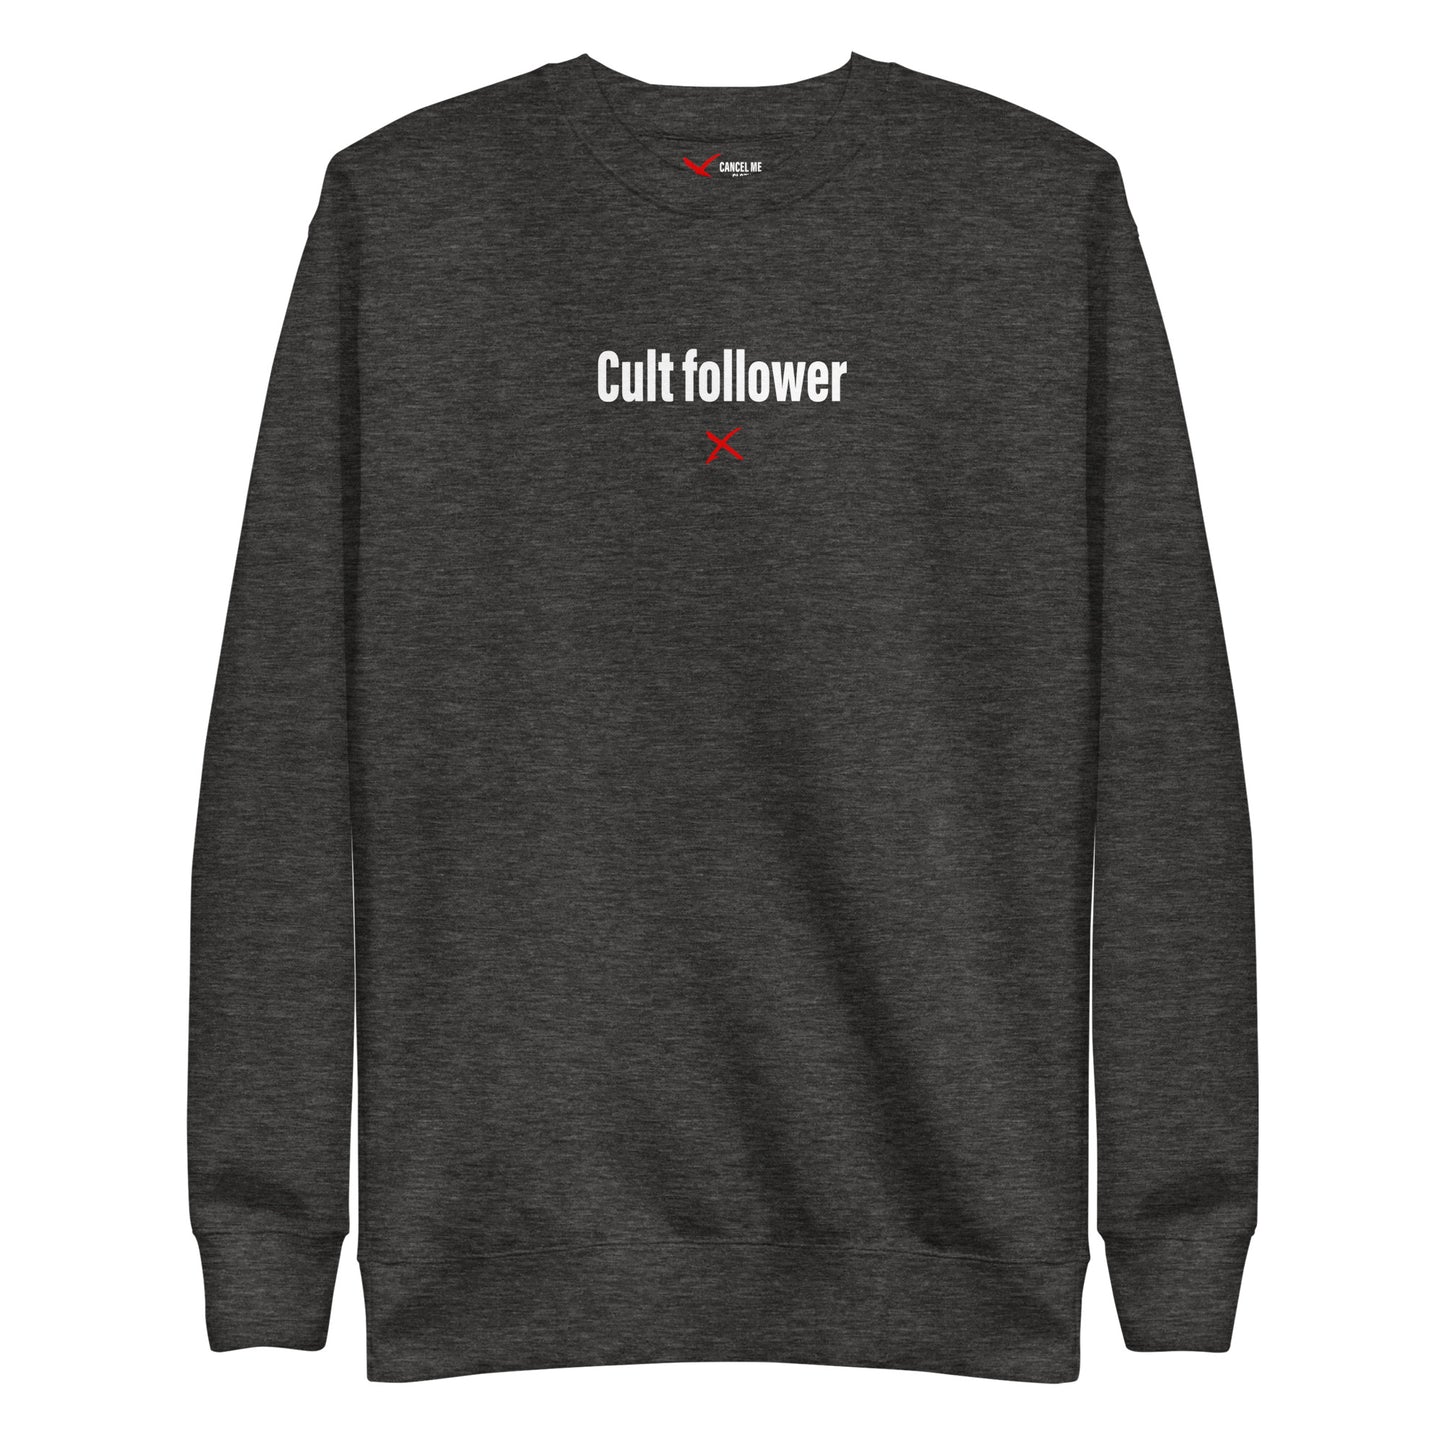 Cult follower - Sweatshirt